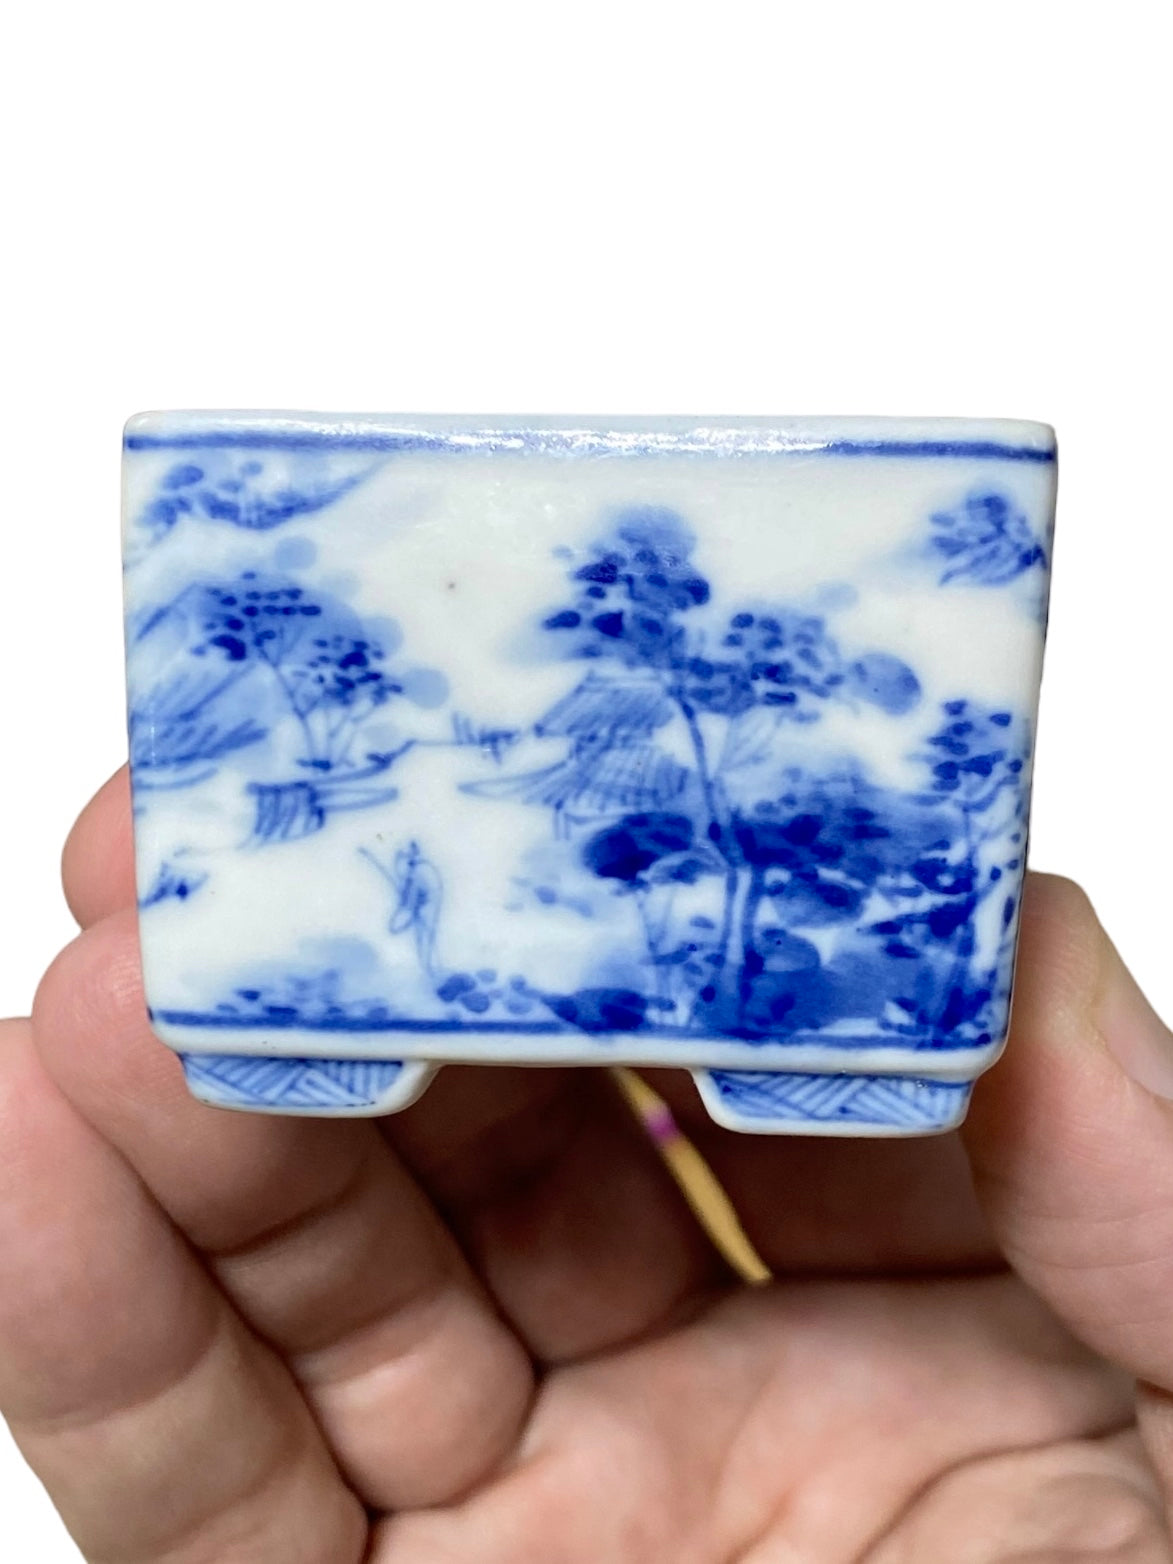 Setsuzan - Painted Mame Rectangle Bonsai Pot